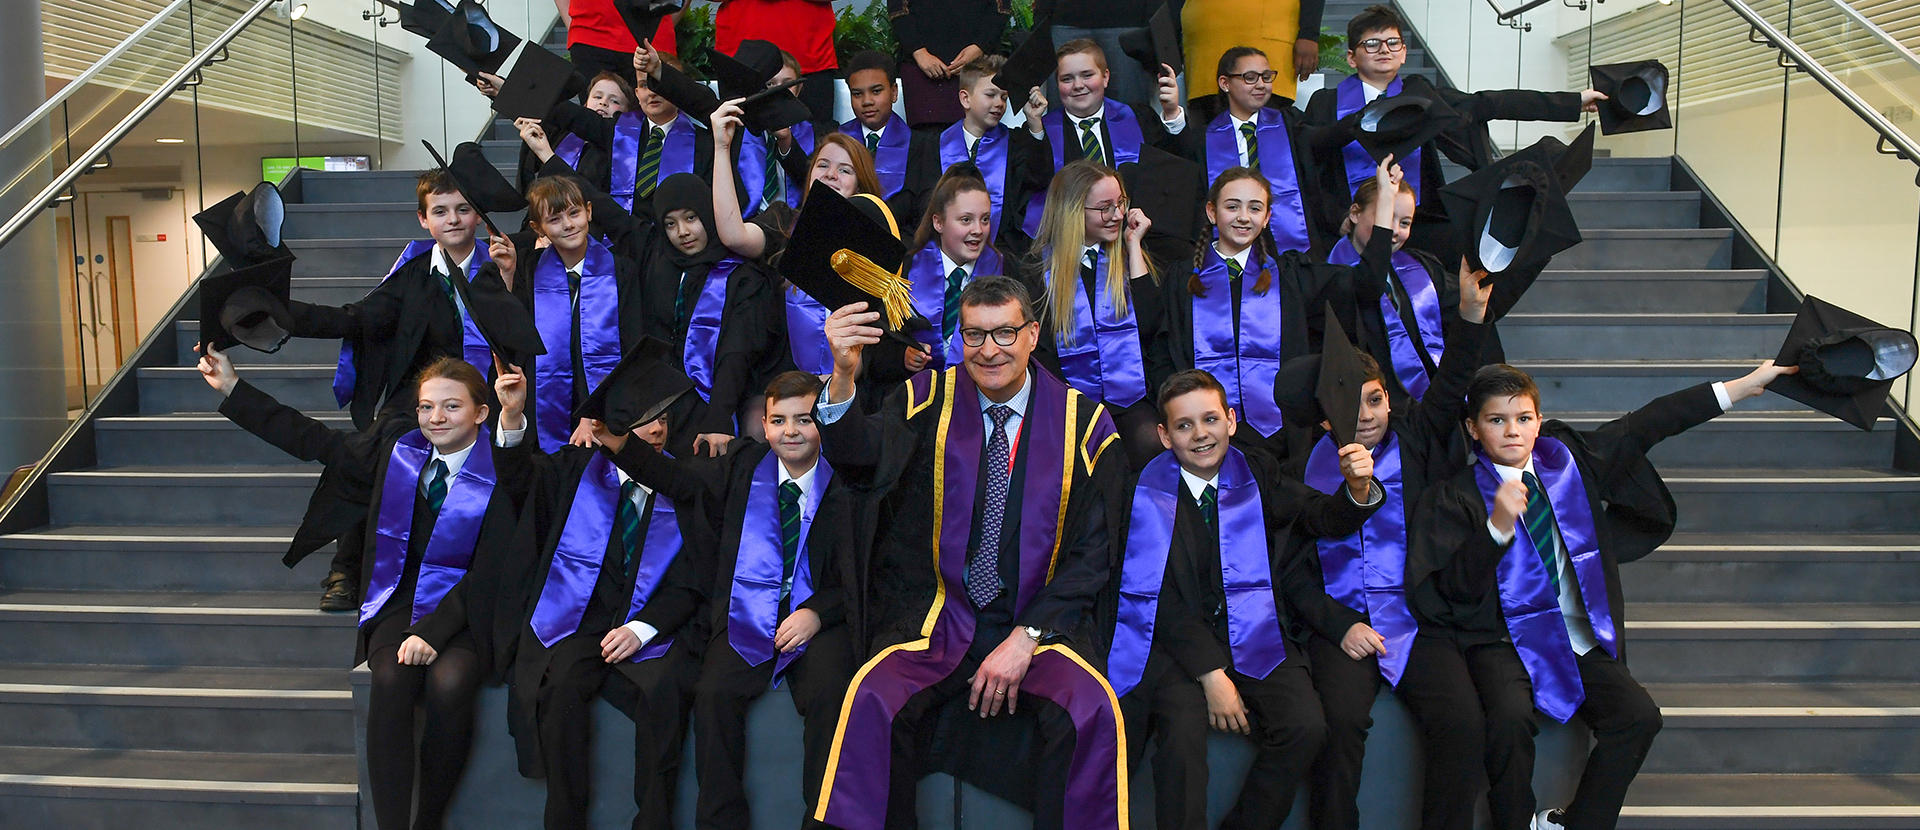 VC and pupils celebrating graduating